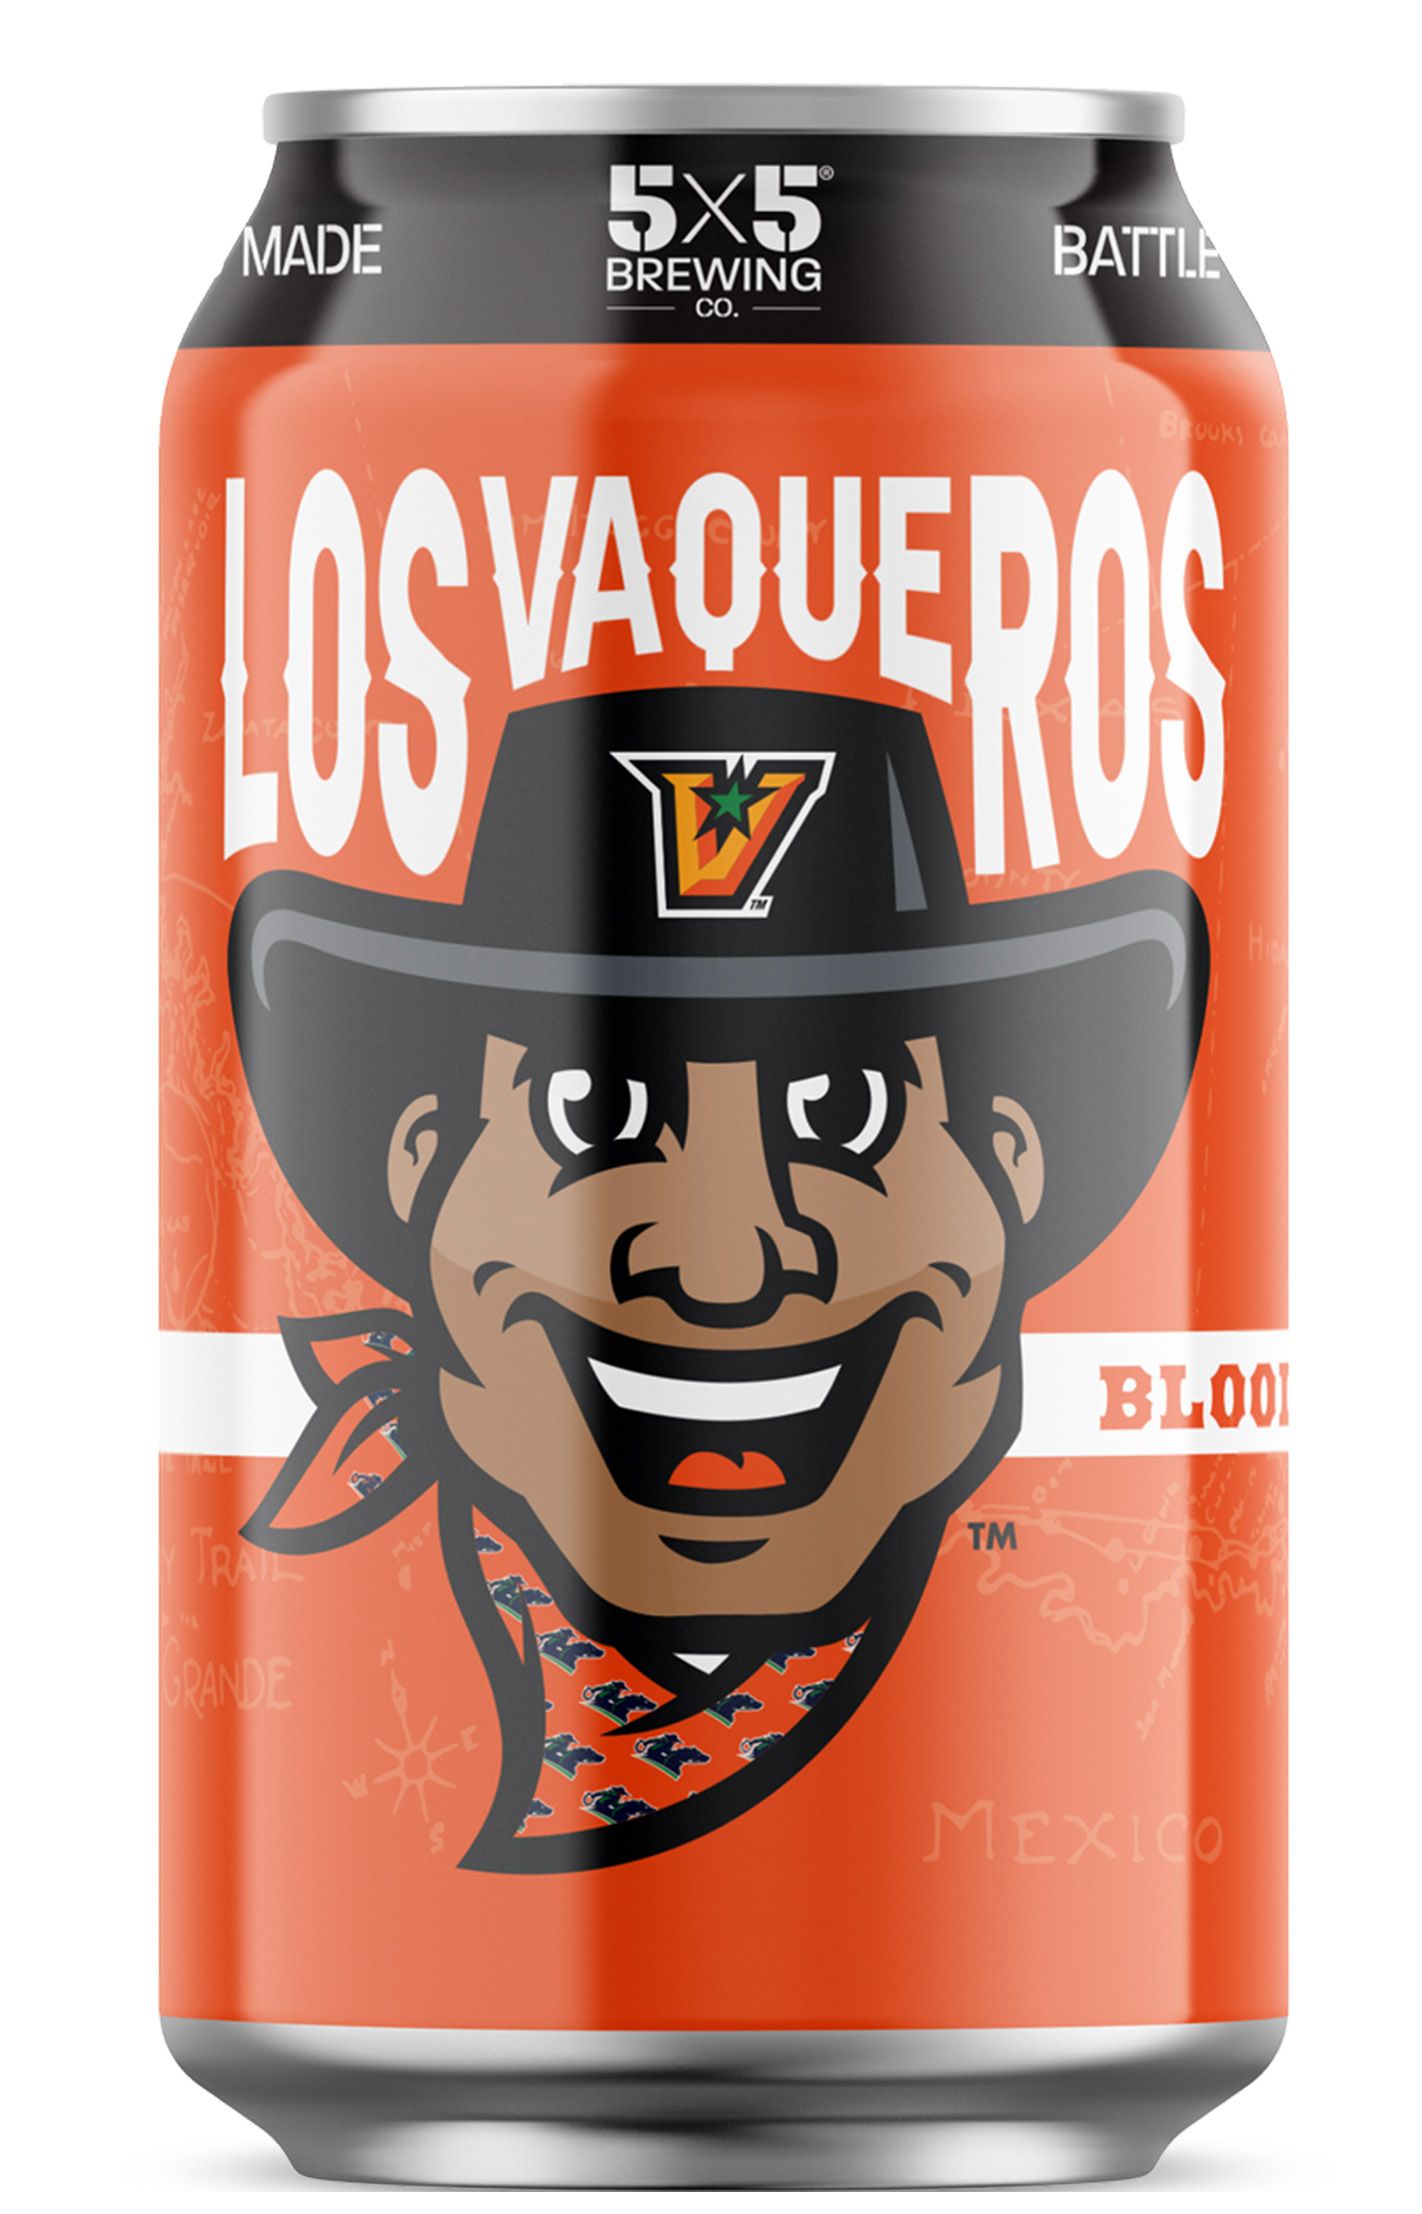 A can of los vaqueros beer with a cowboy on it.